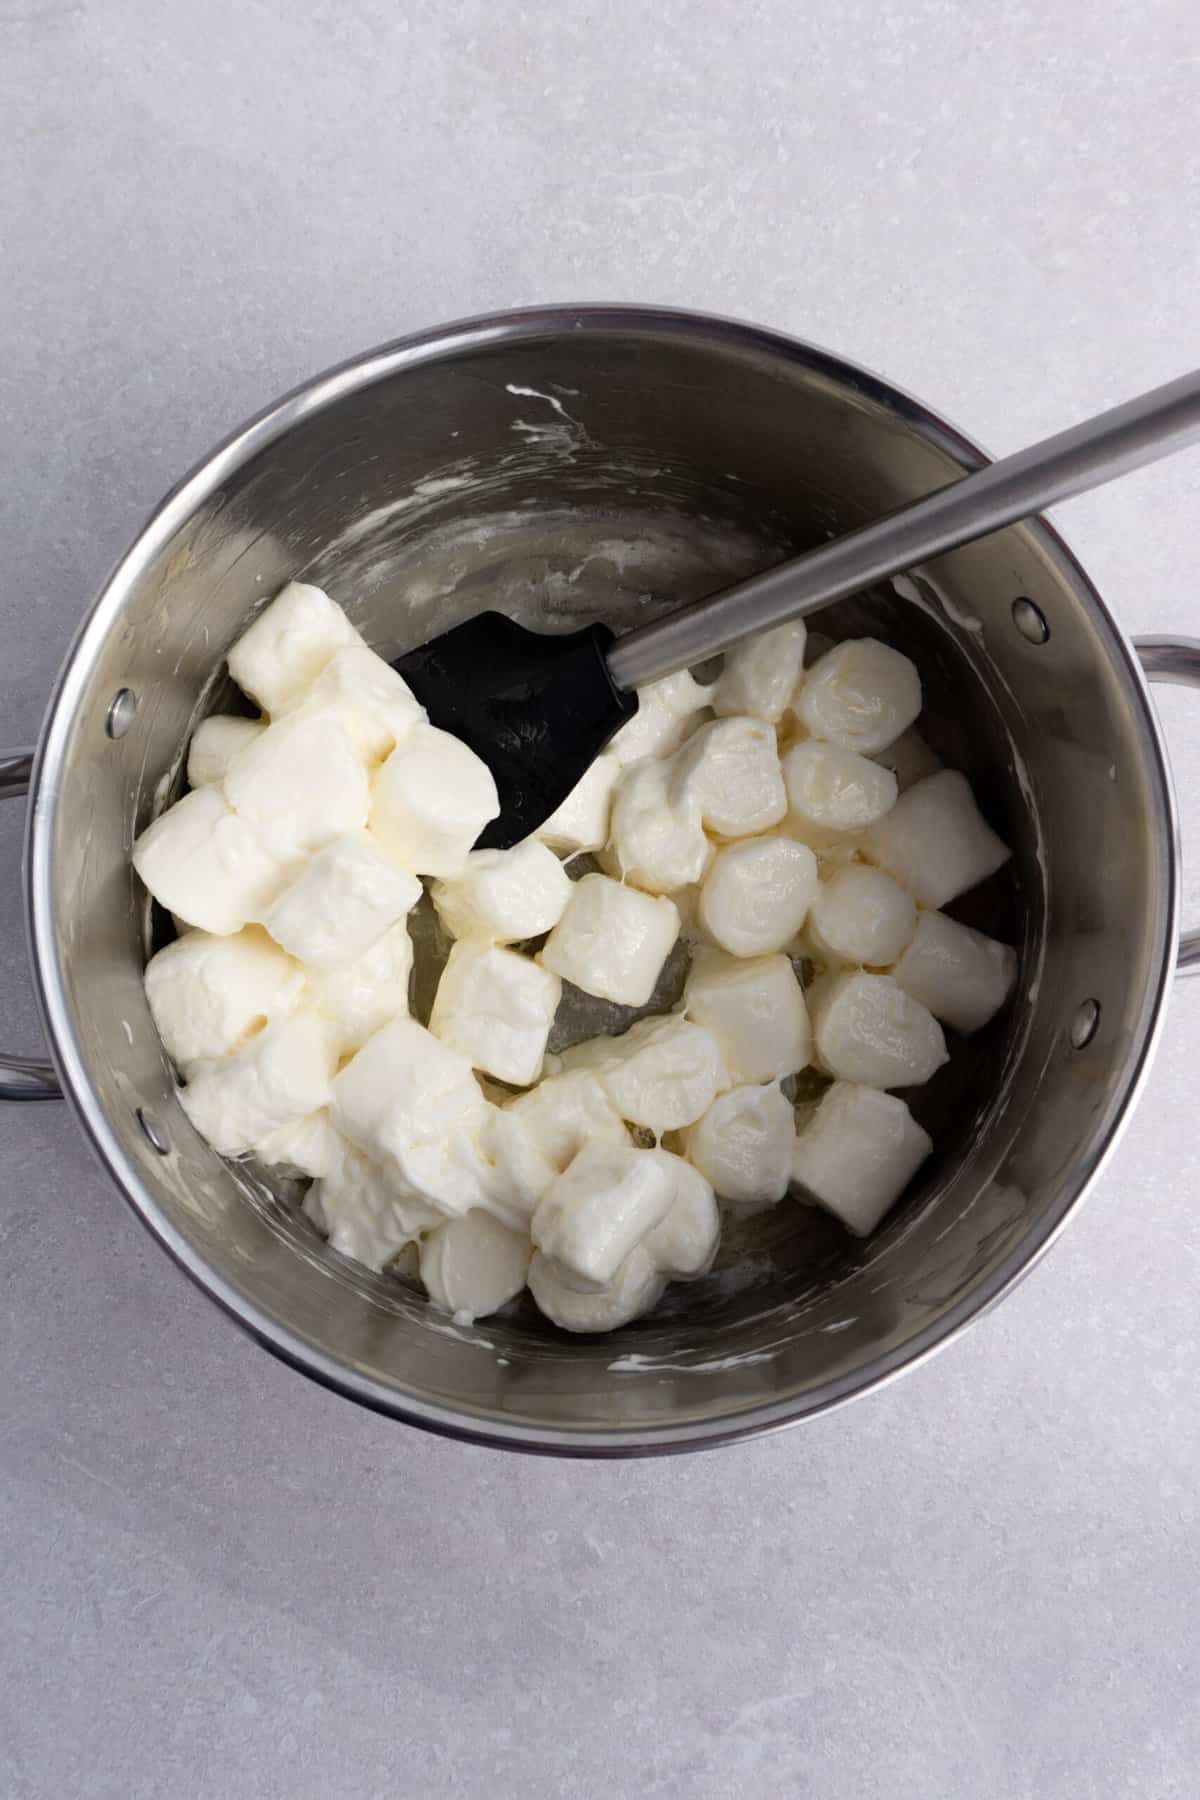 marshmallows melting in a pot in preparation for making copycat Disney rice krispie treats.